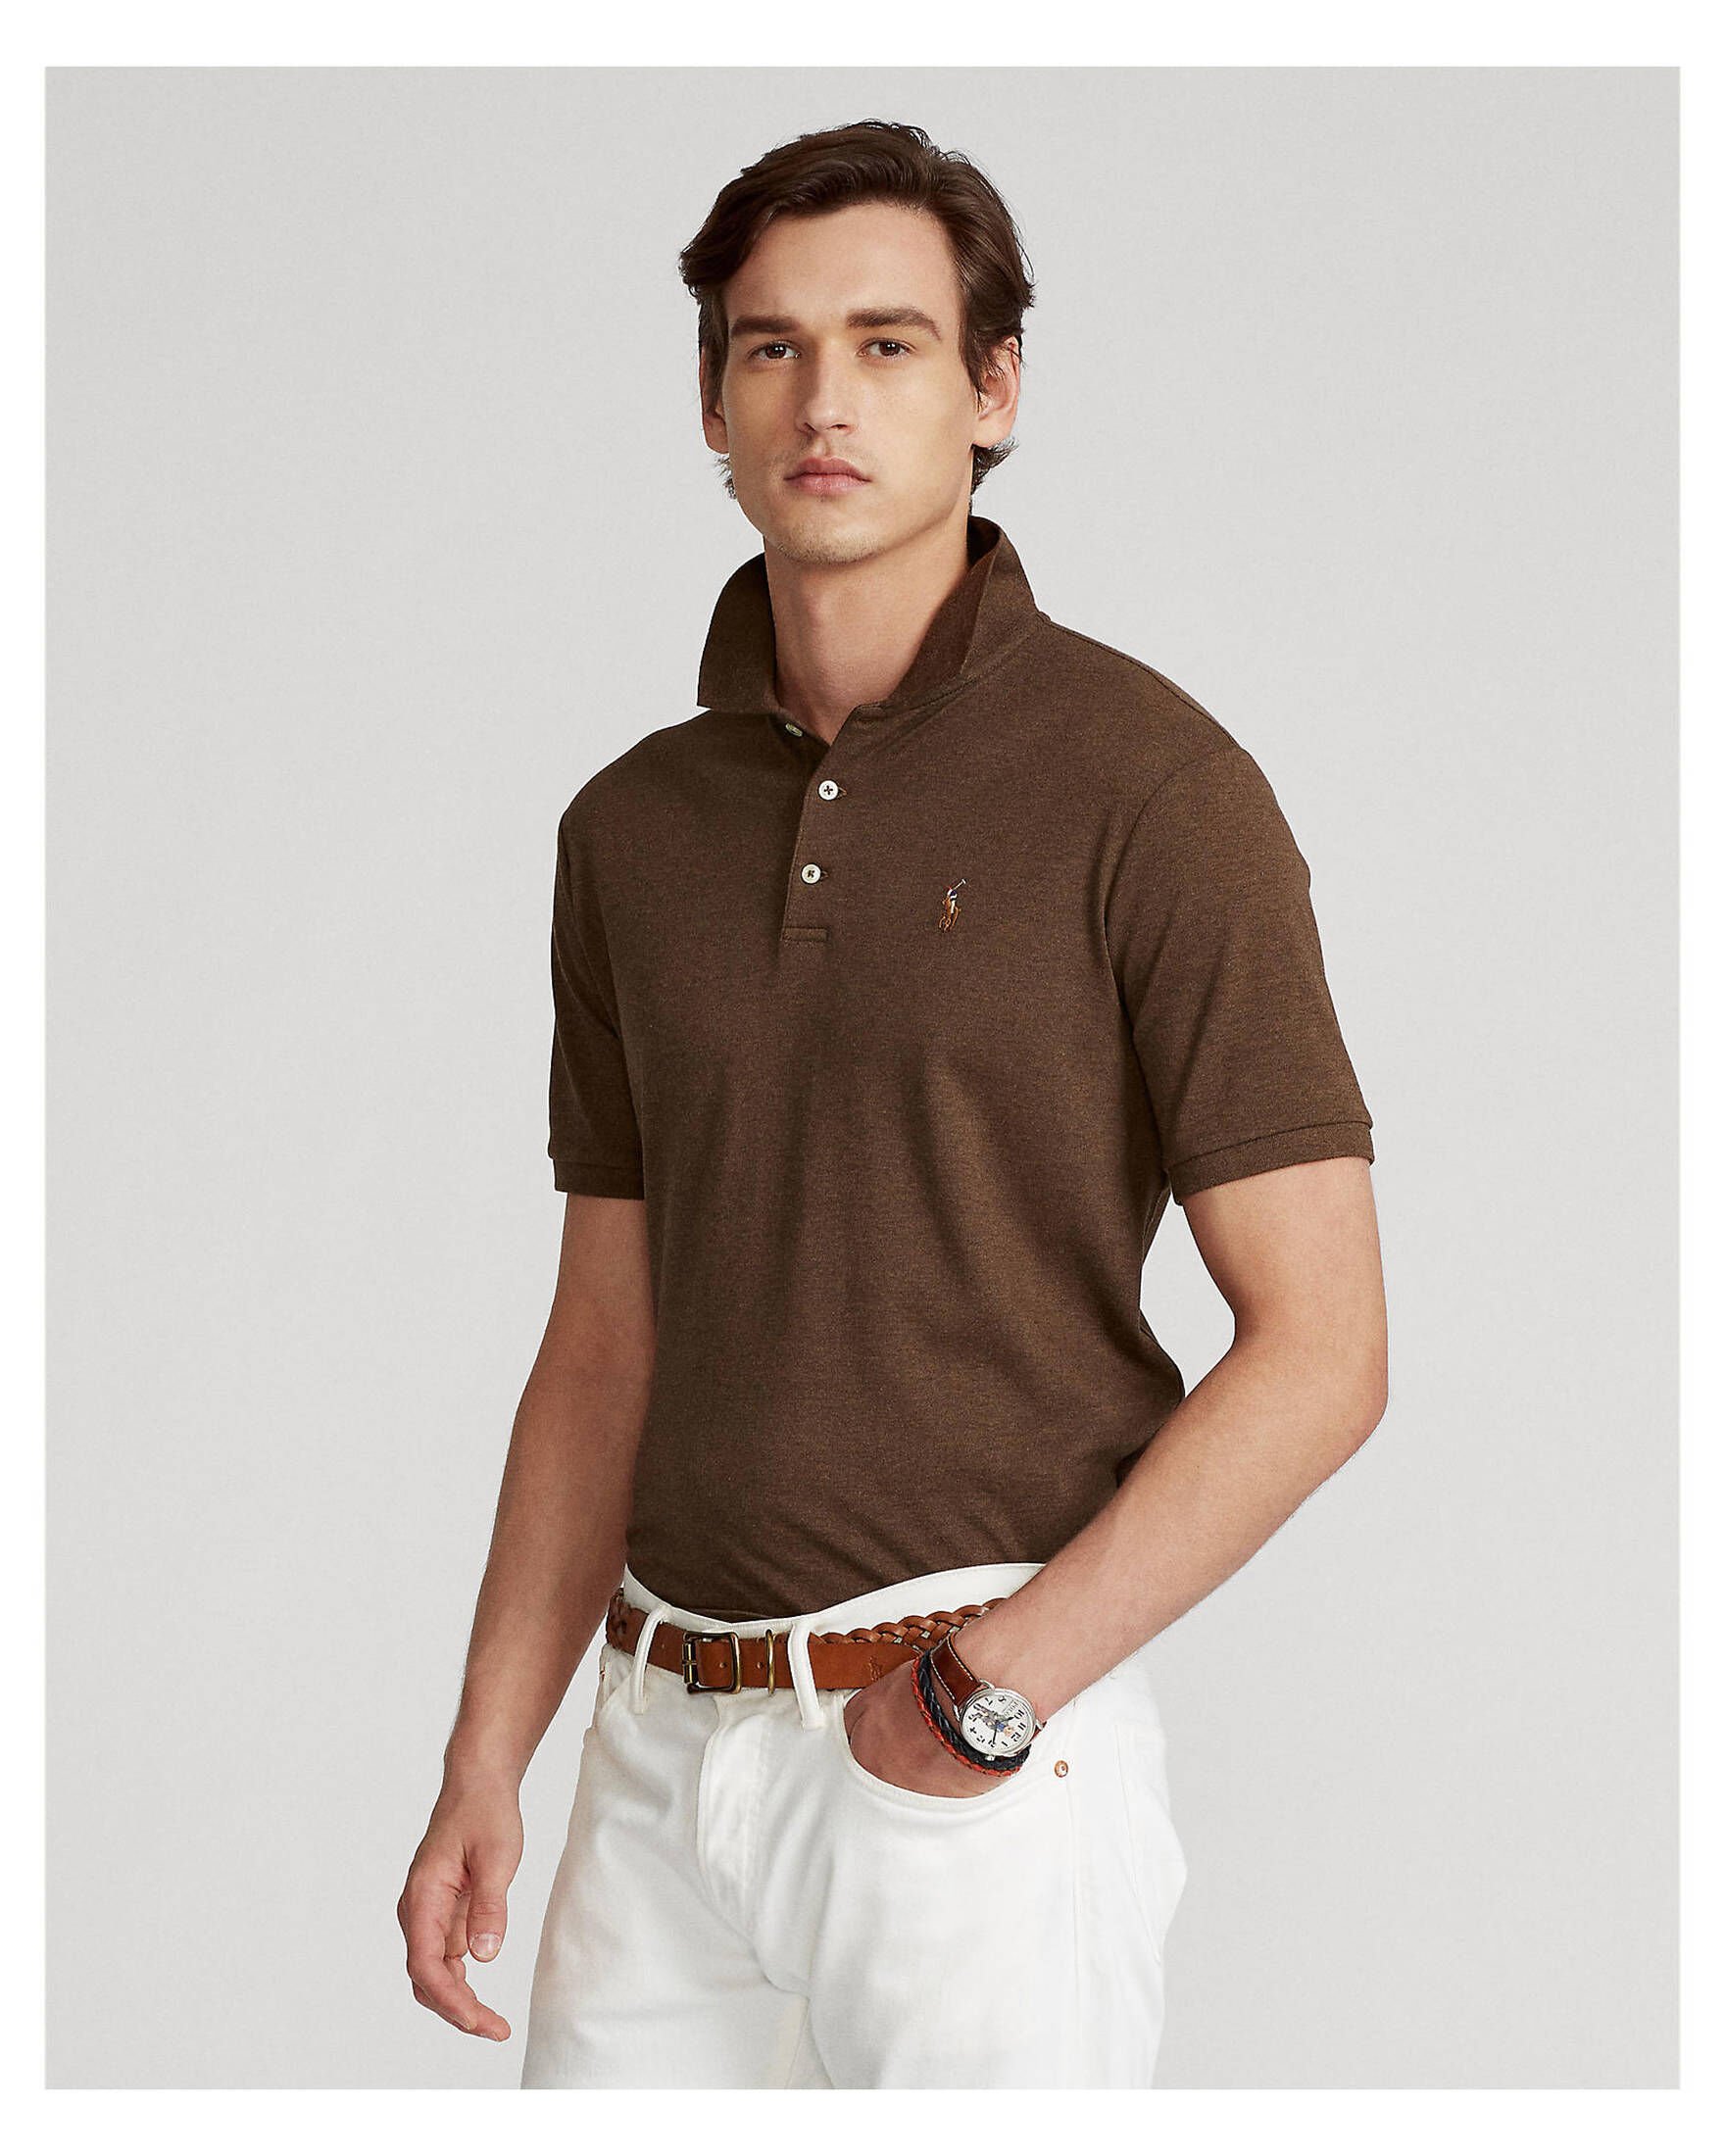 Polo Ralph Lauren Herren Poloshirt Slim kaufen | engelhorn